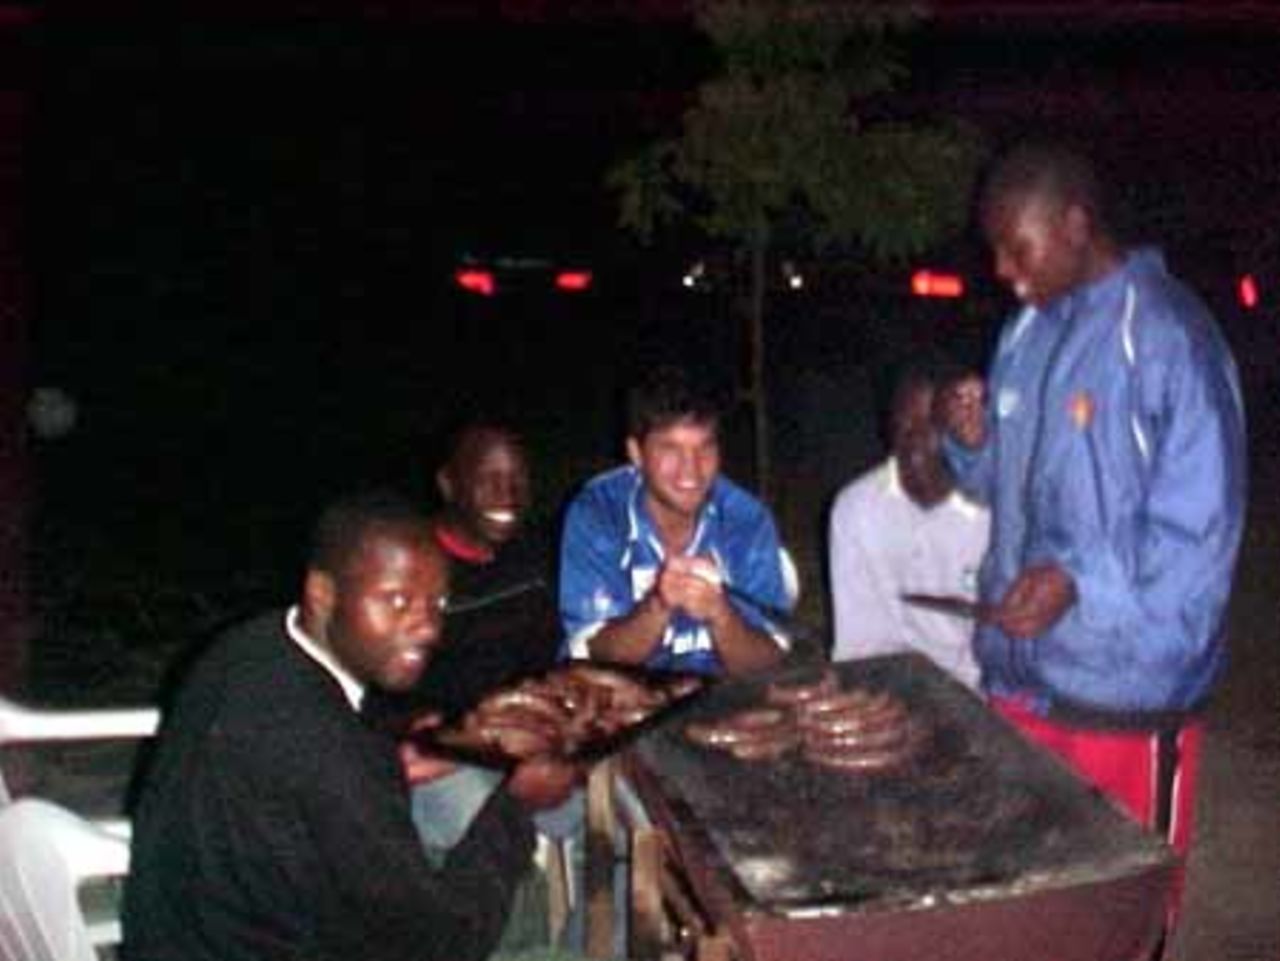 Candidates enjoying the Barbeque